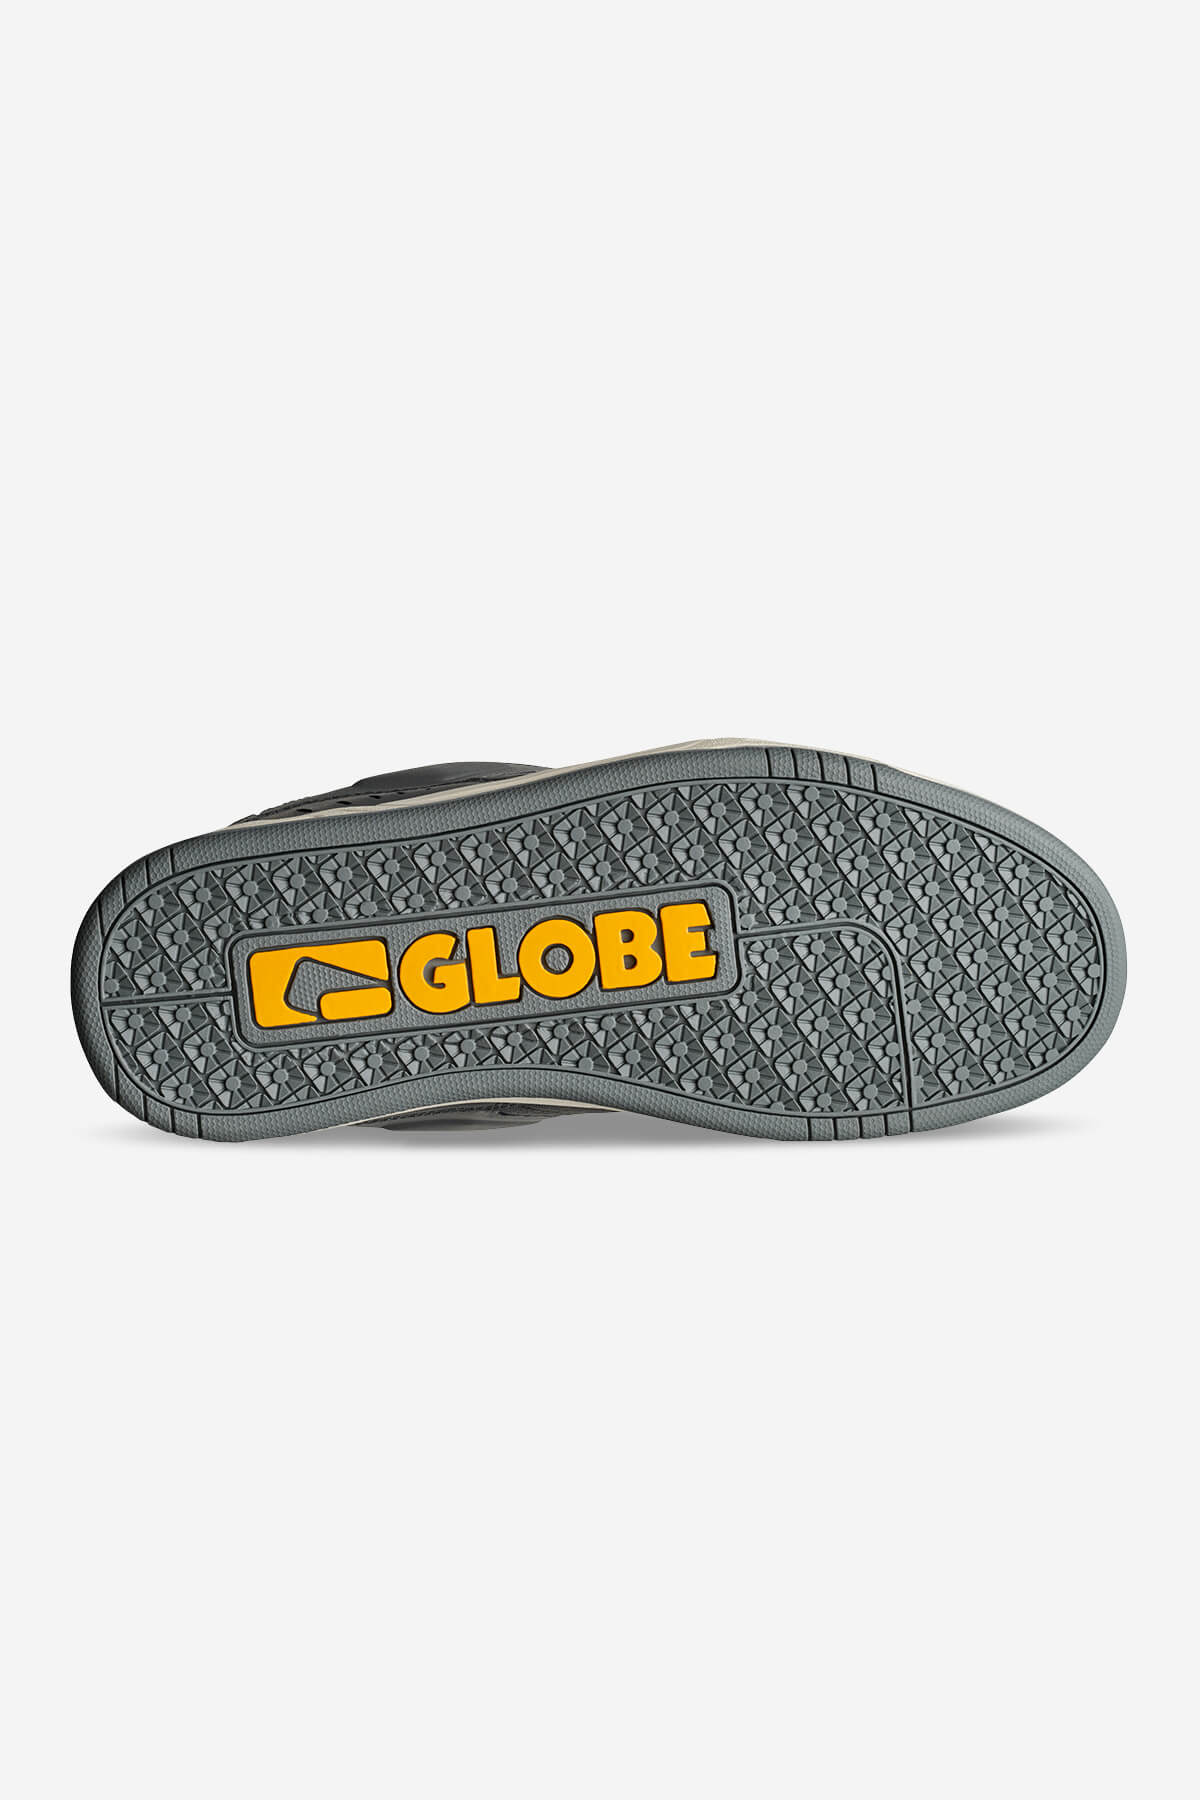 Globe - Fusion - Lead/Antique - Skate Shoes